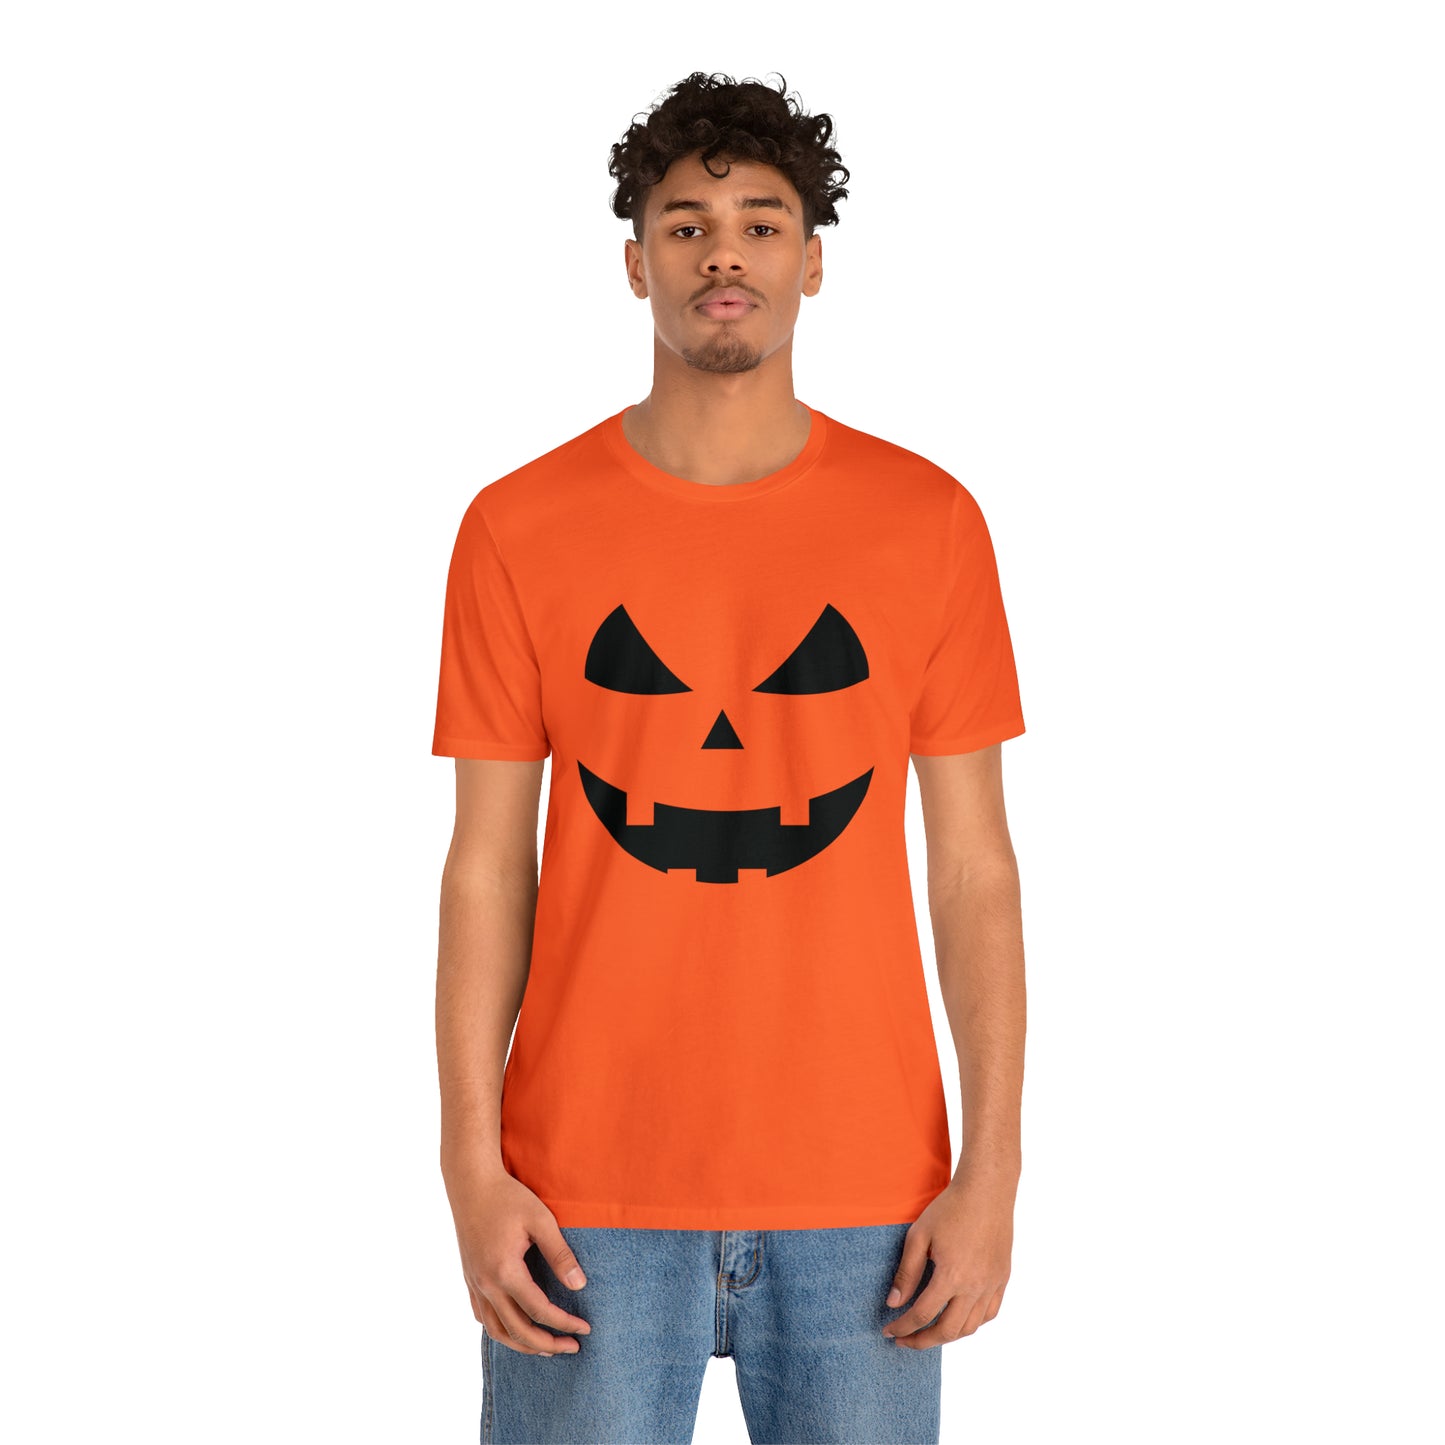 Jack O' Lantern Halloween Costume Tee